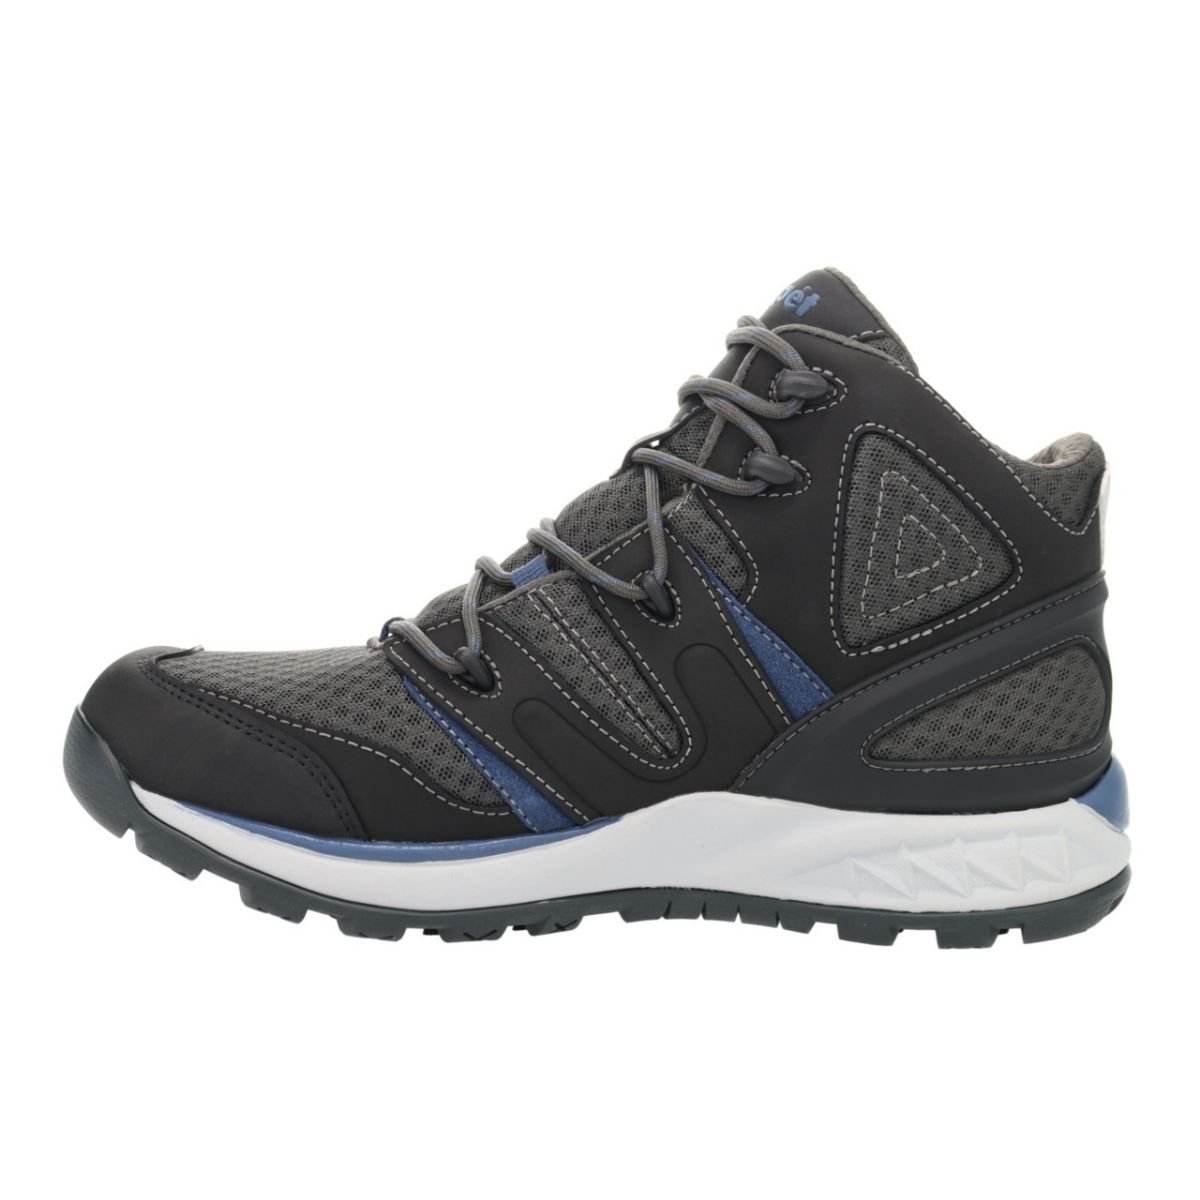 Propet Men's Veymont Waterproof Hiking Boot Grey/Blue - MOA022SGRB GREY/BLUE - GREY/BLUE, 16 X-Wide